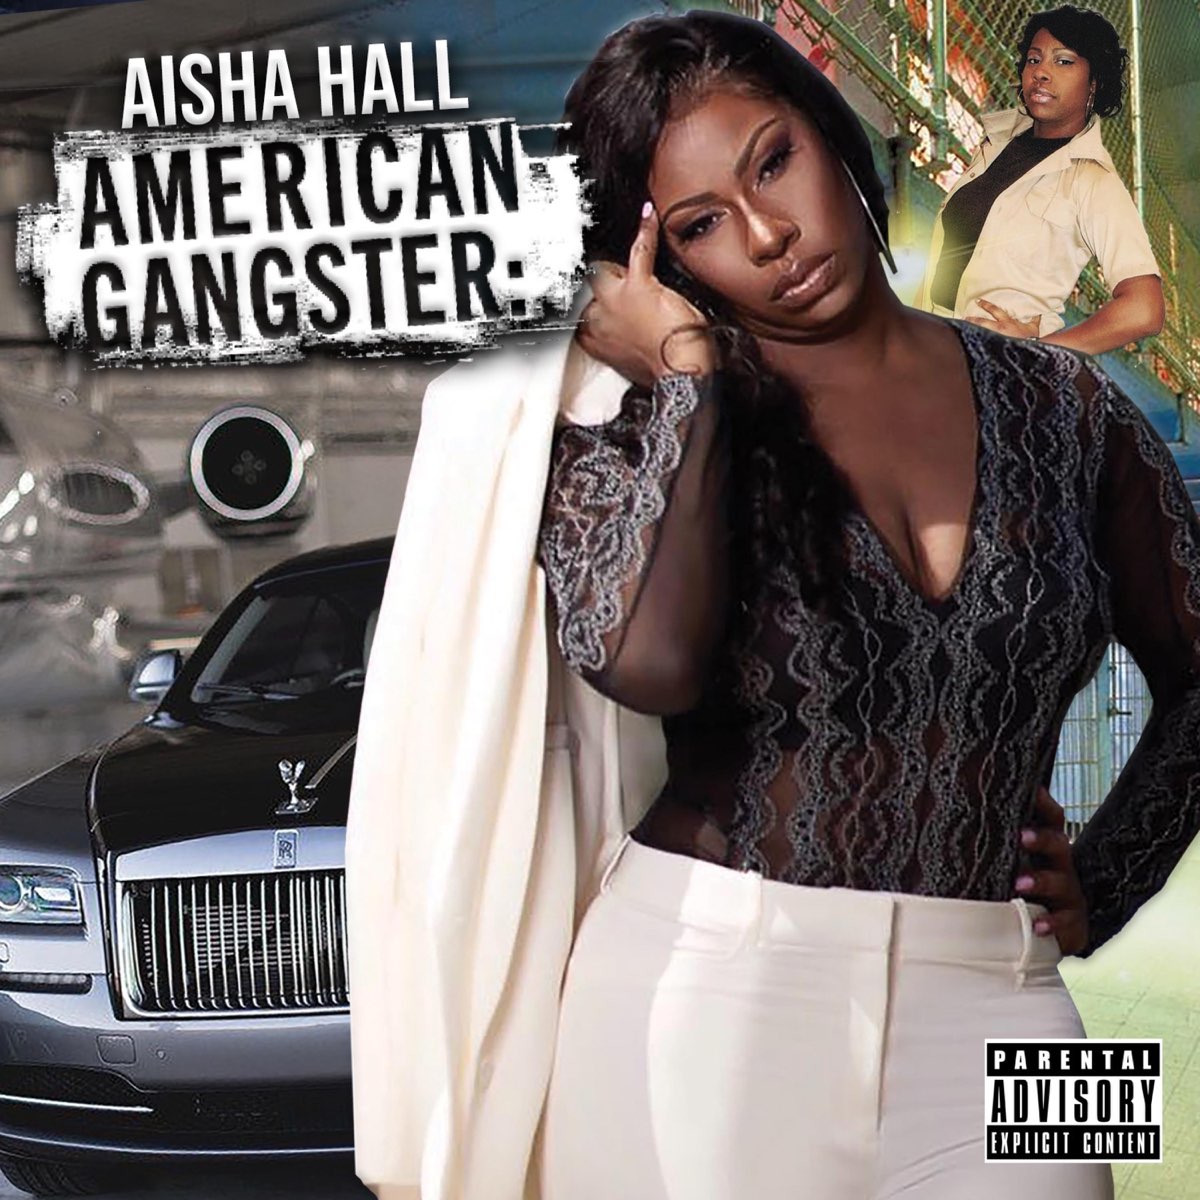 American gangster trap queens aisha hall